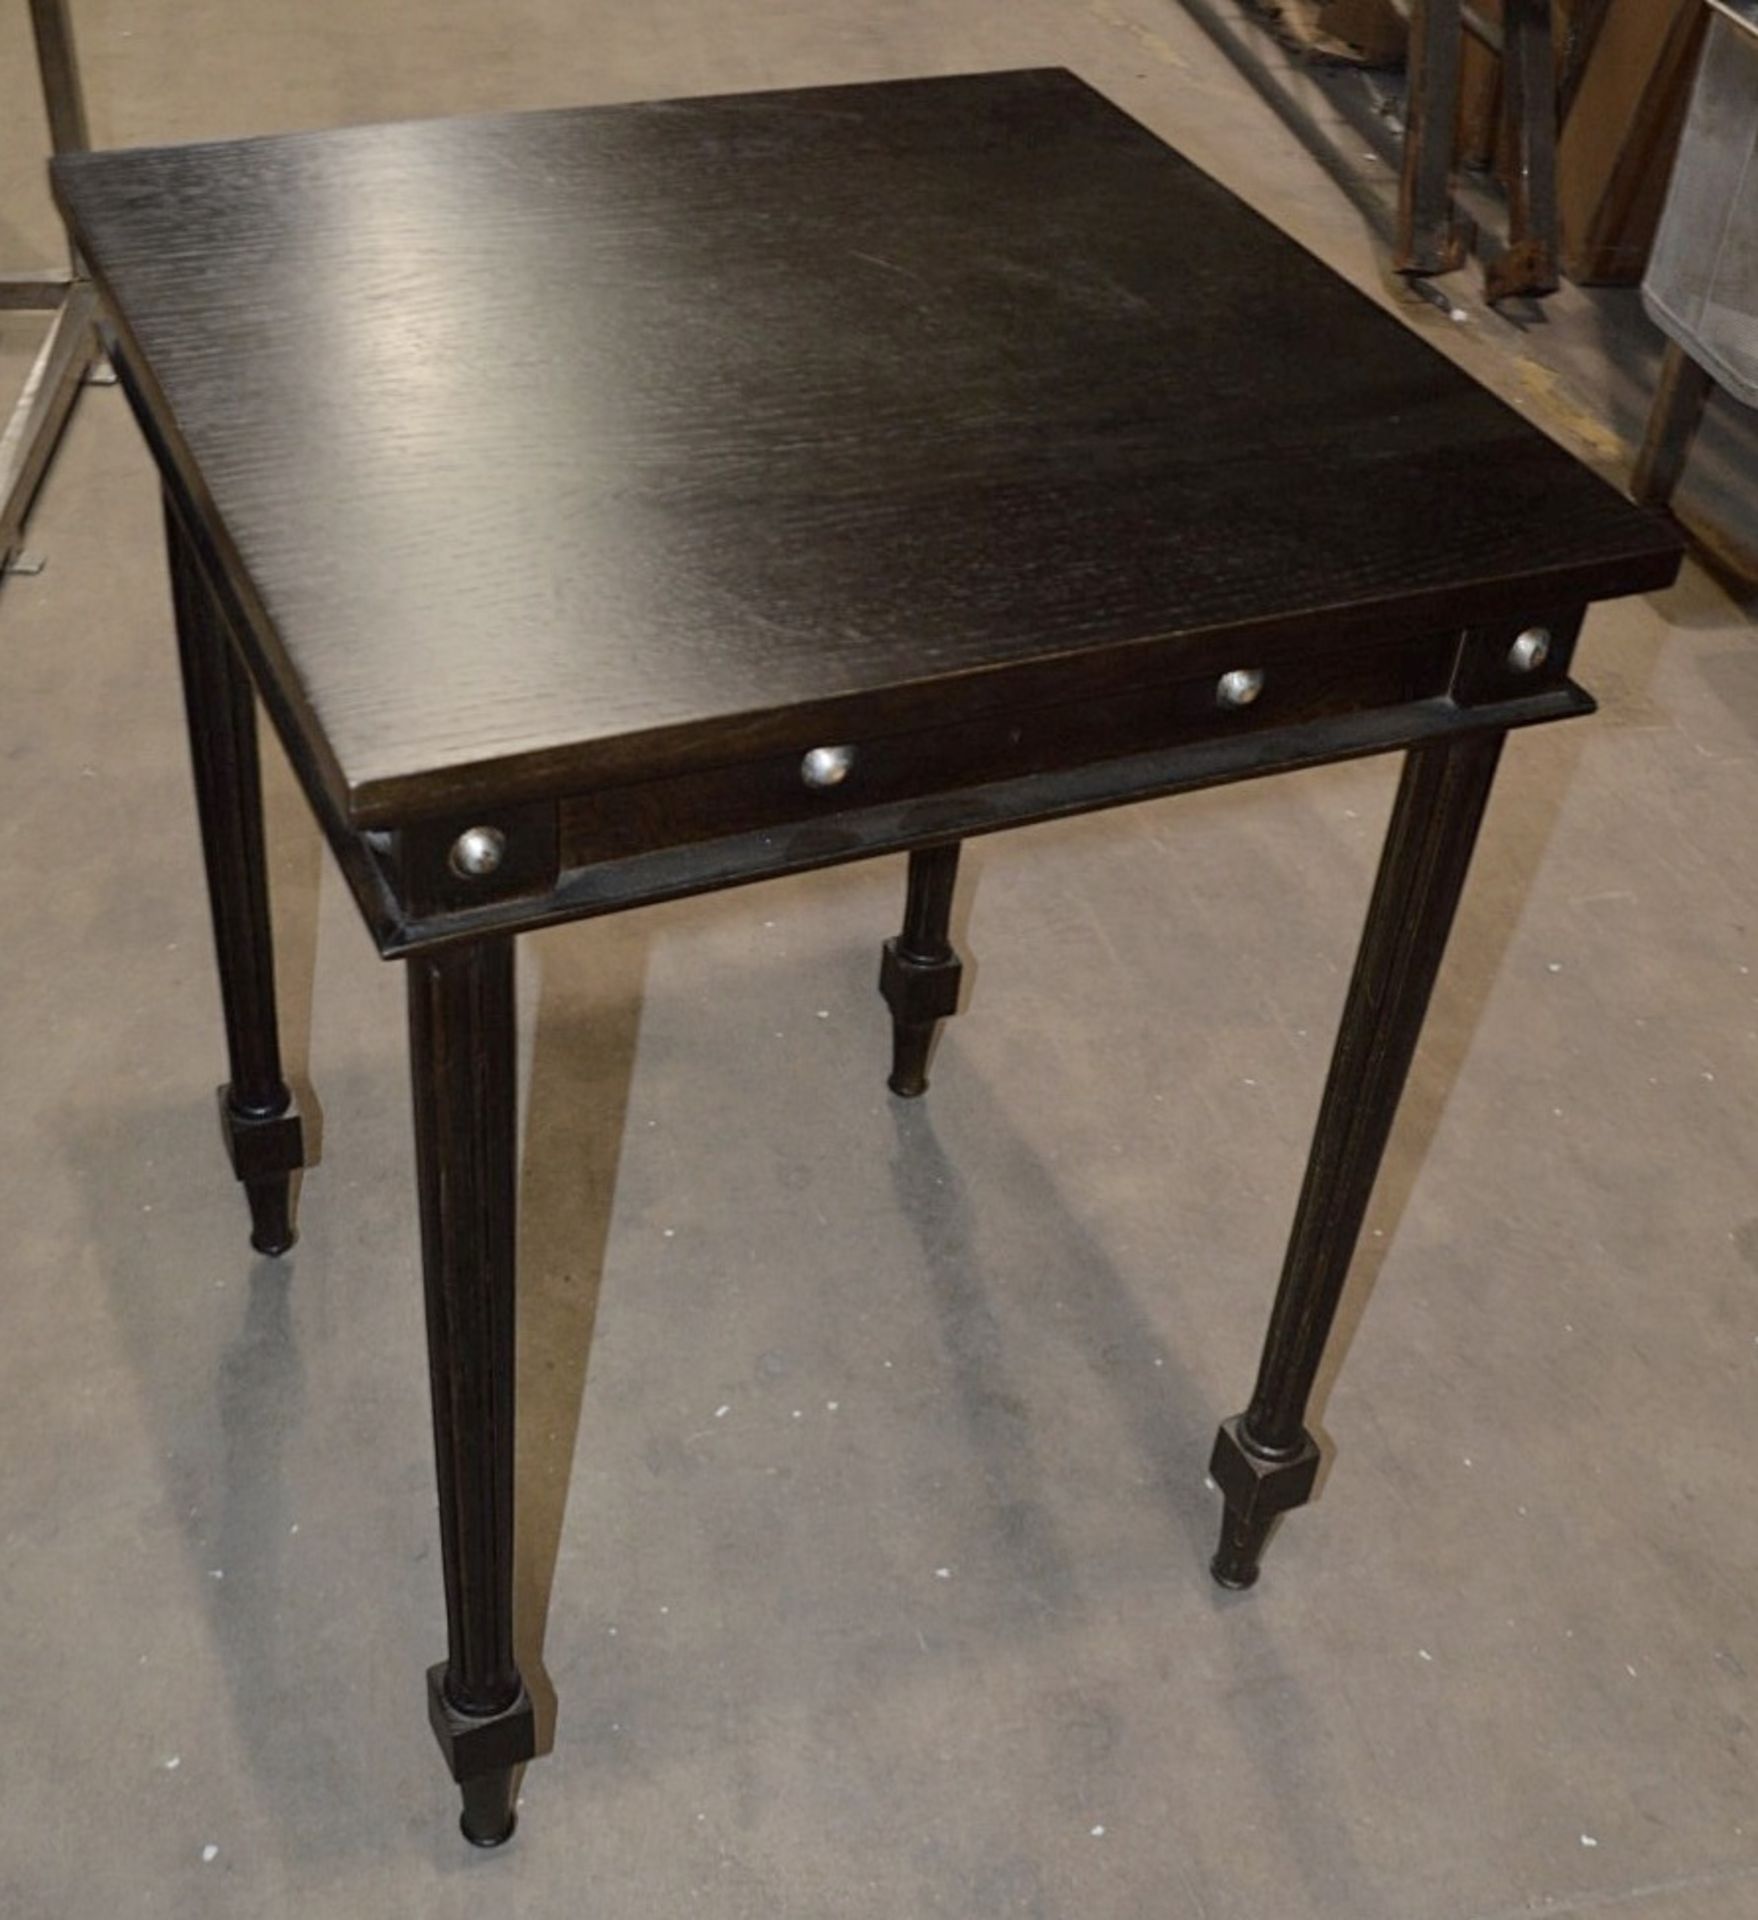 1 x JUSTIN VAN BREDA 'Thomas' Tall Side Table With A Dark Oak Finish - Dimensions: W50 x D50 x H65cm - Image 2 of 5